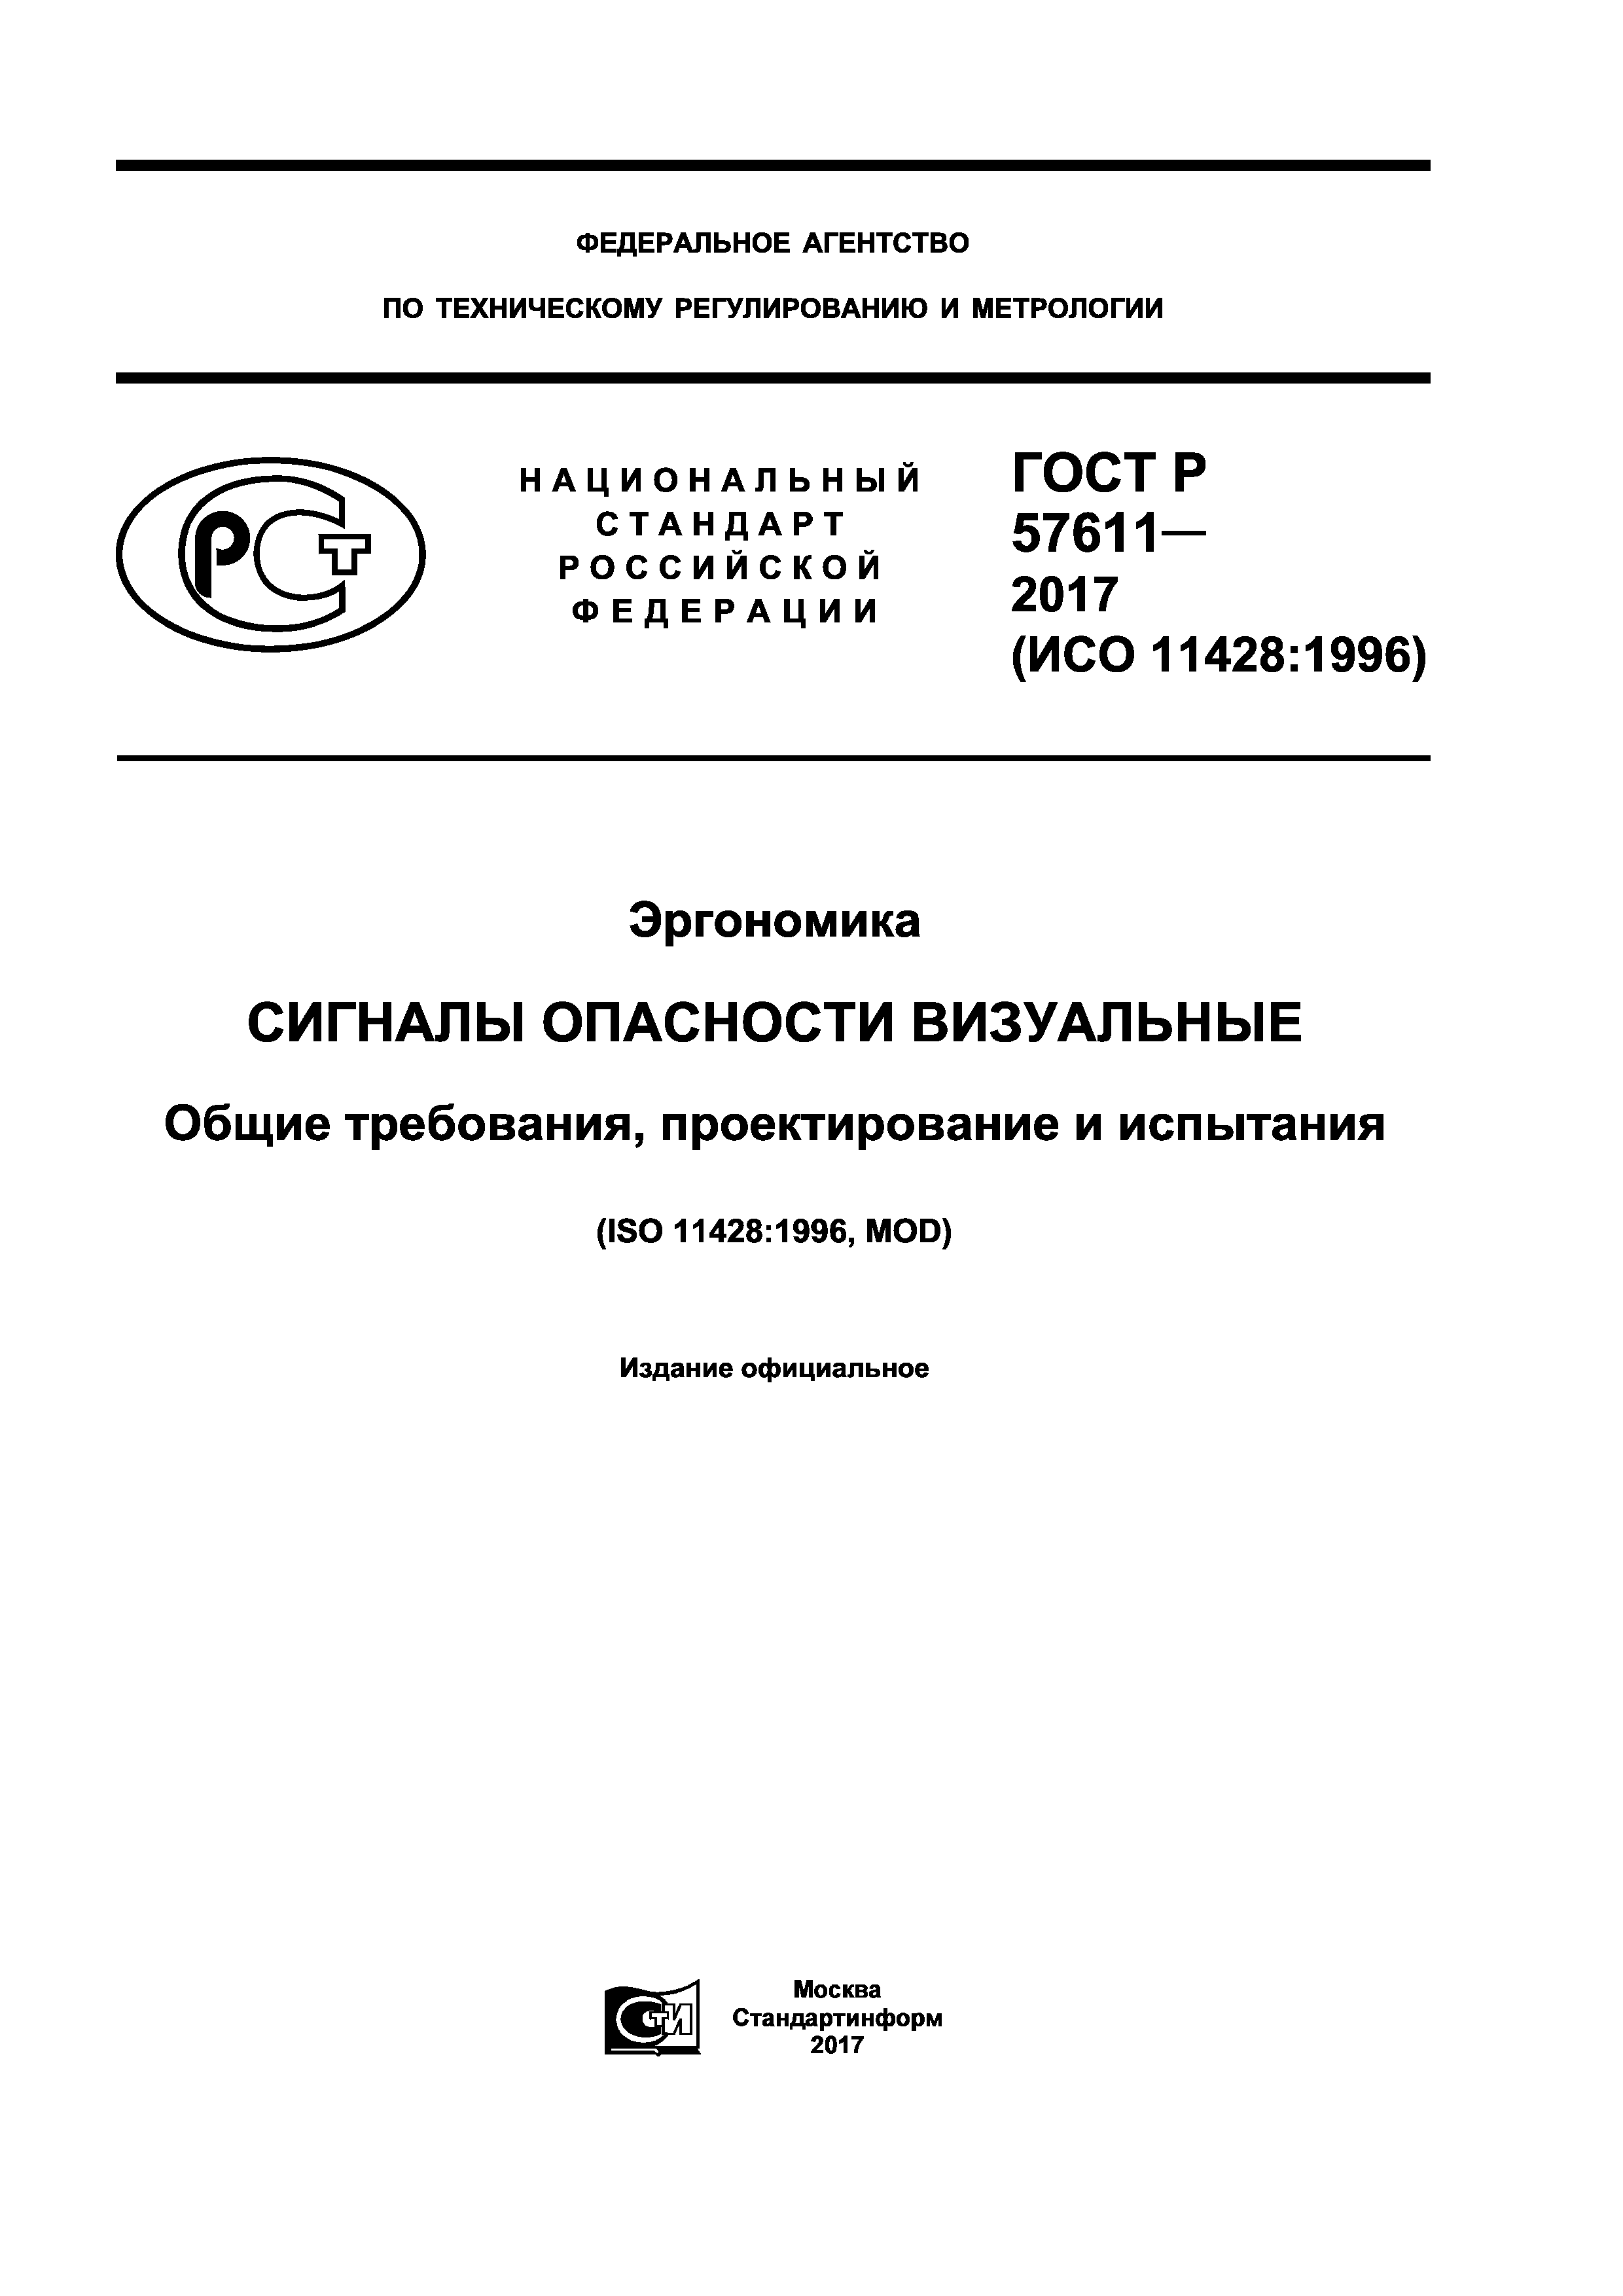 ГОСТ Р 57611-2017